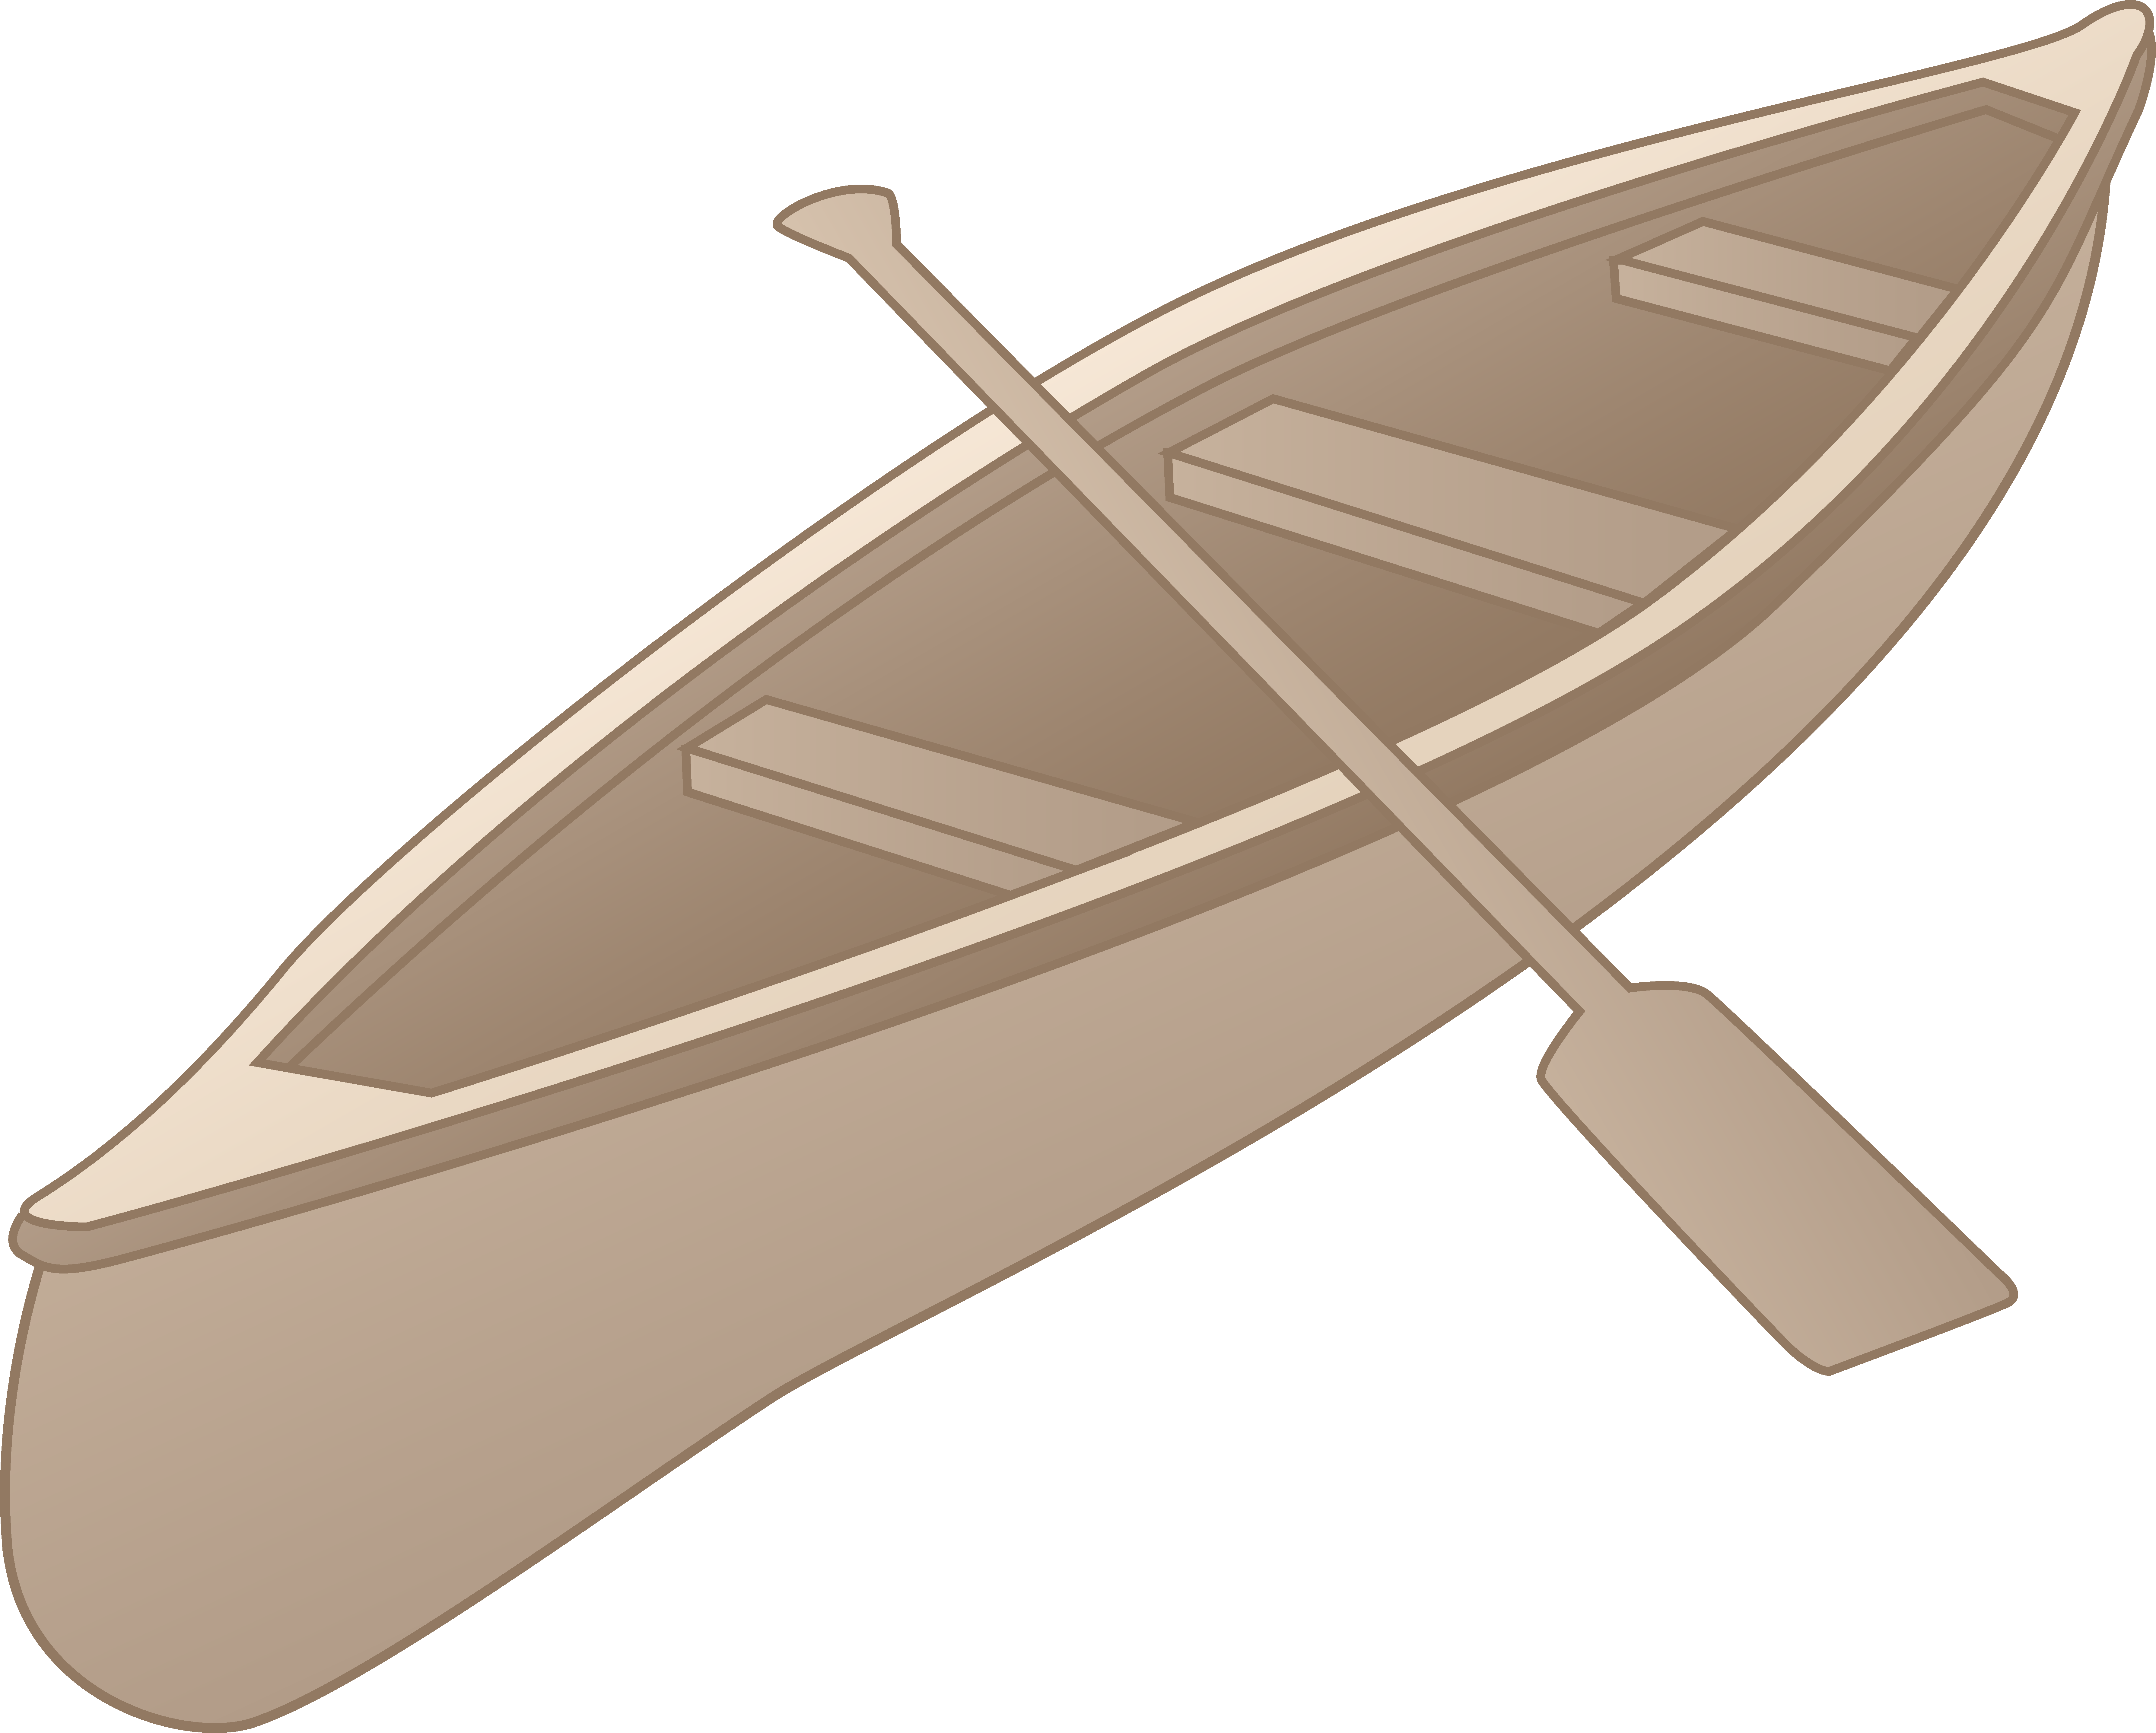 Chèo thuyền